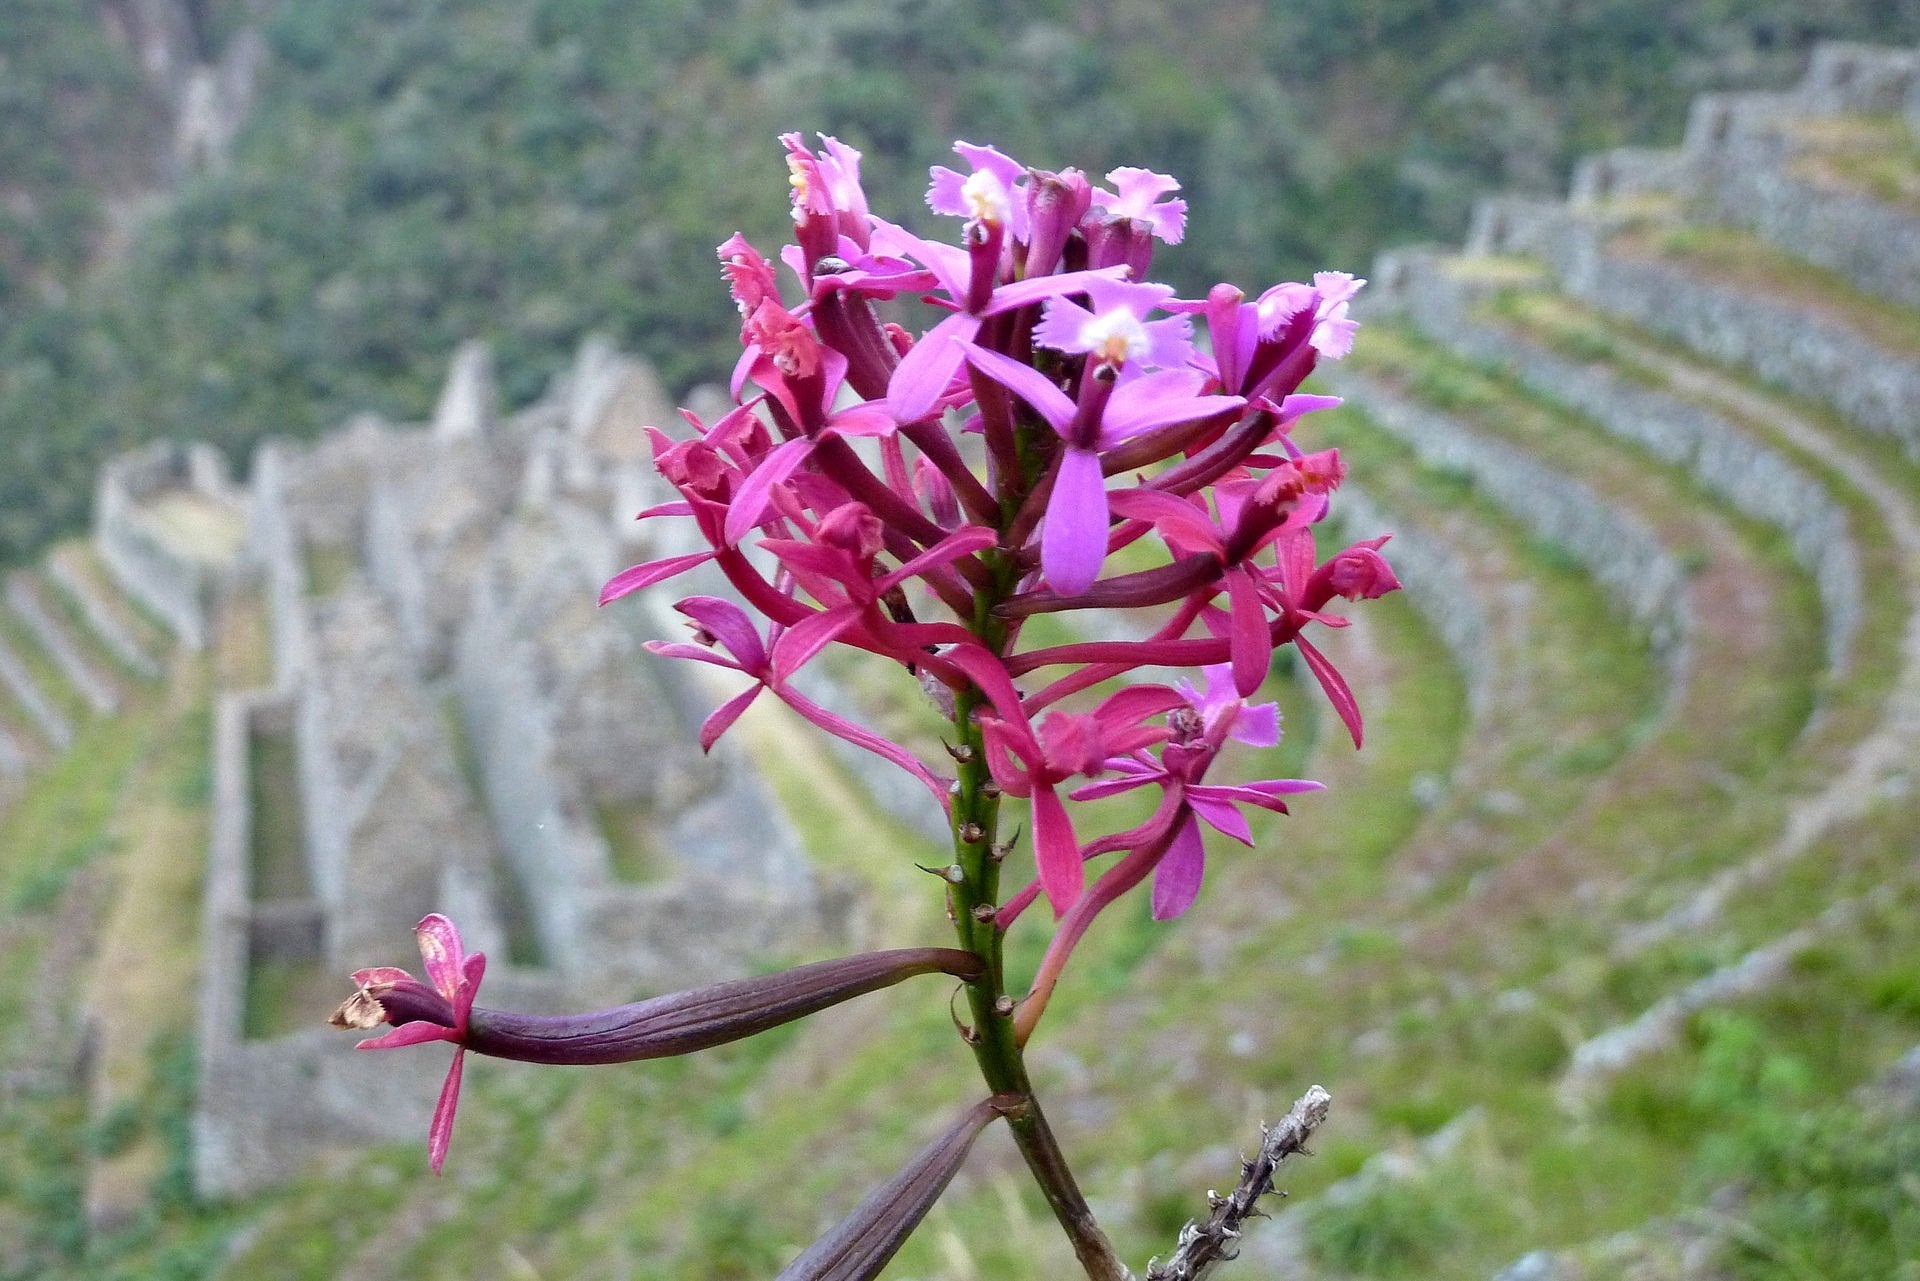 Epidendrum secundum var. variegata